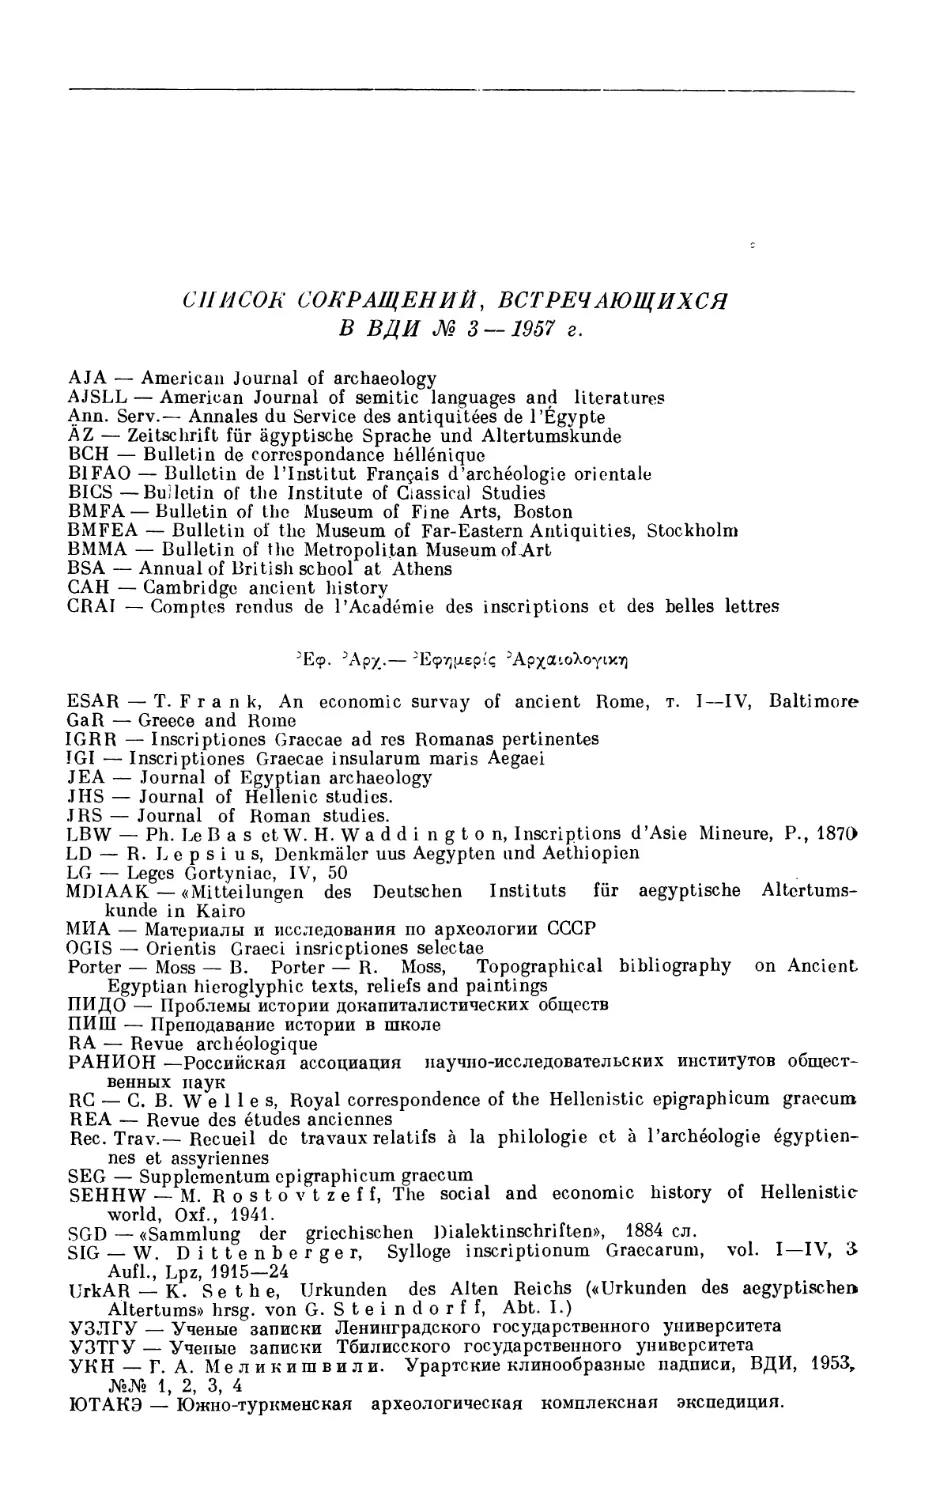 Список сокращений, встречающихся в ВДИ №3-1957 г.